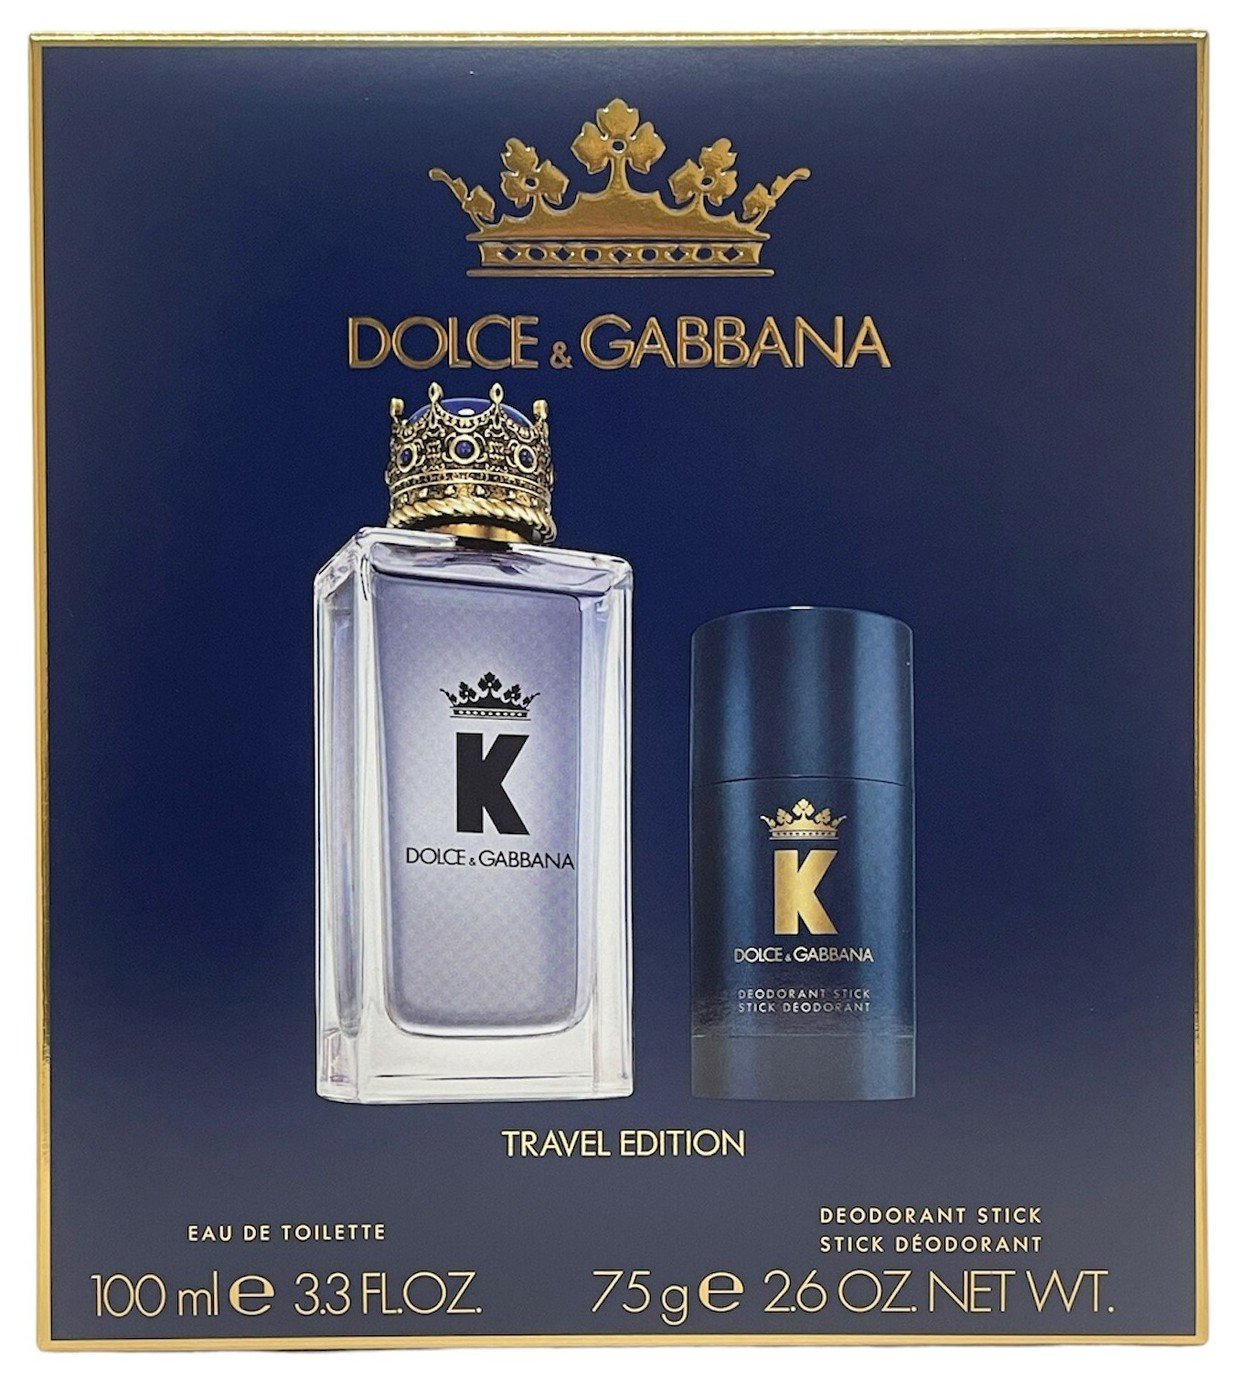 Dolce & Gabbana Men's Eau de Toilette Giftset